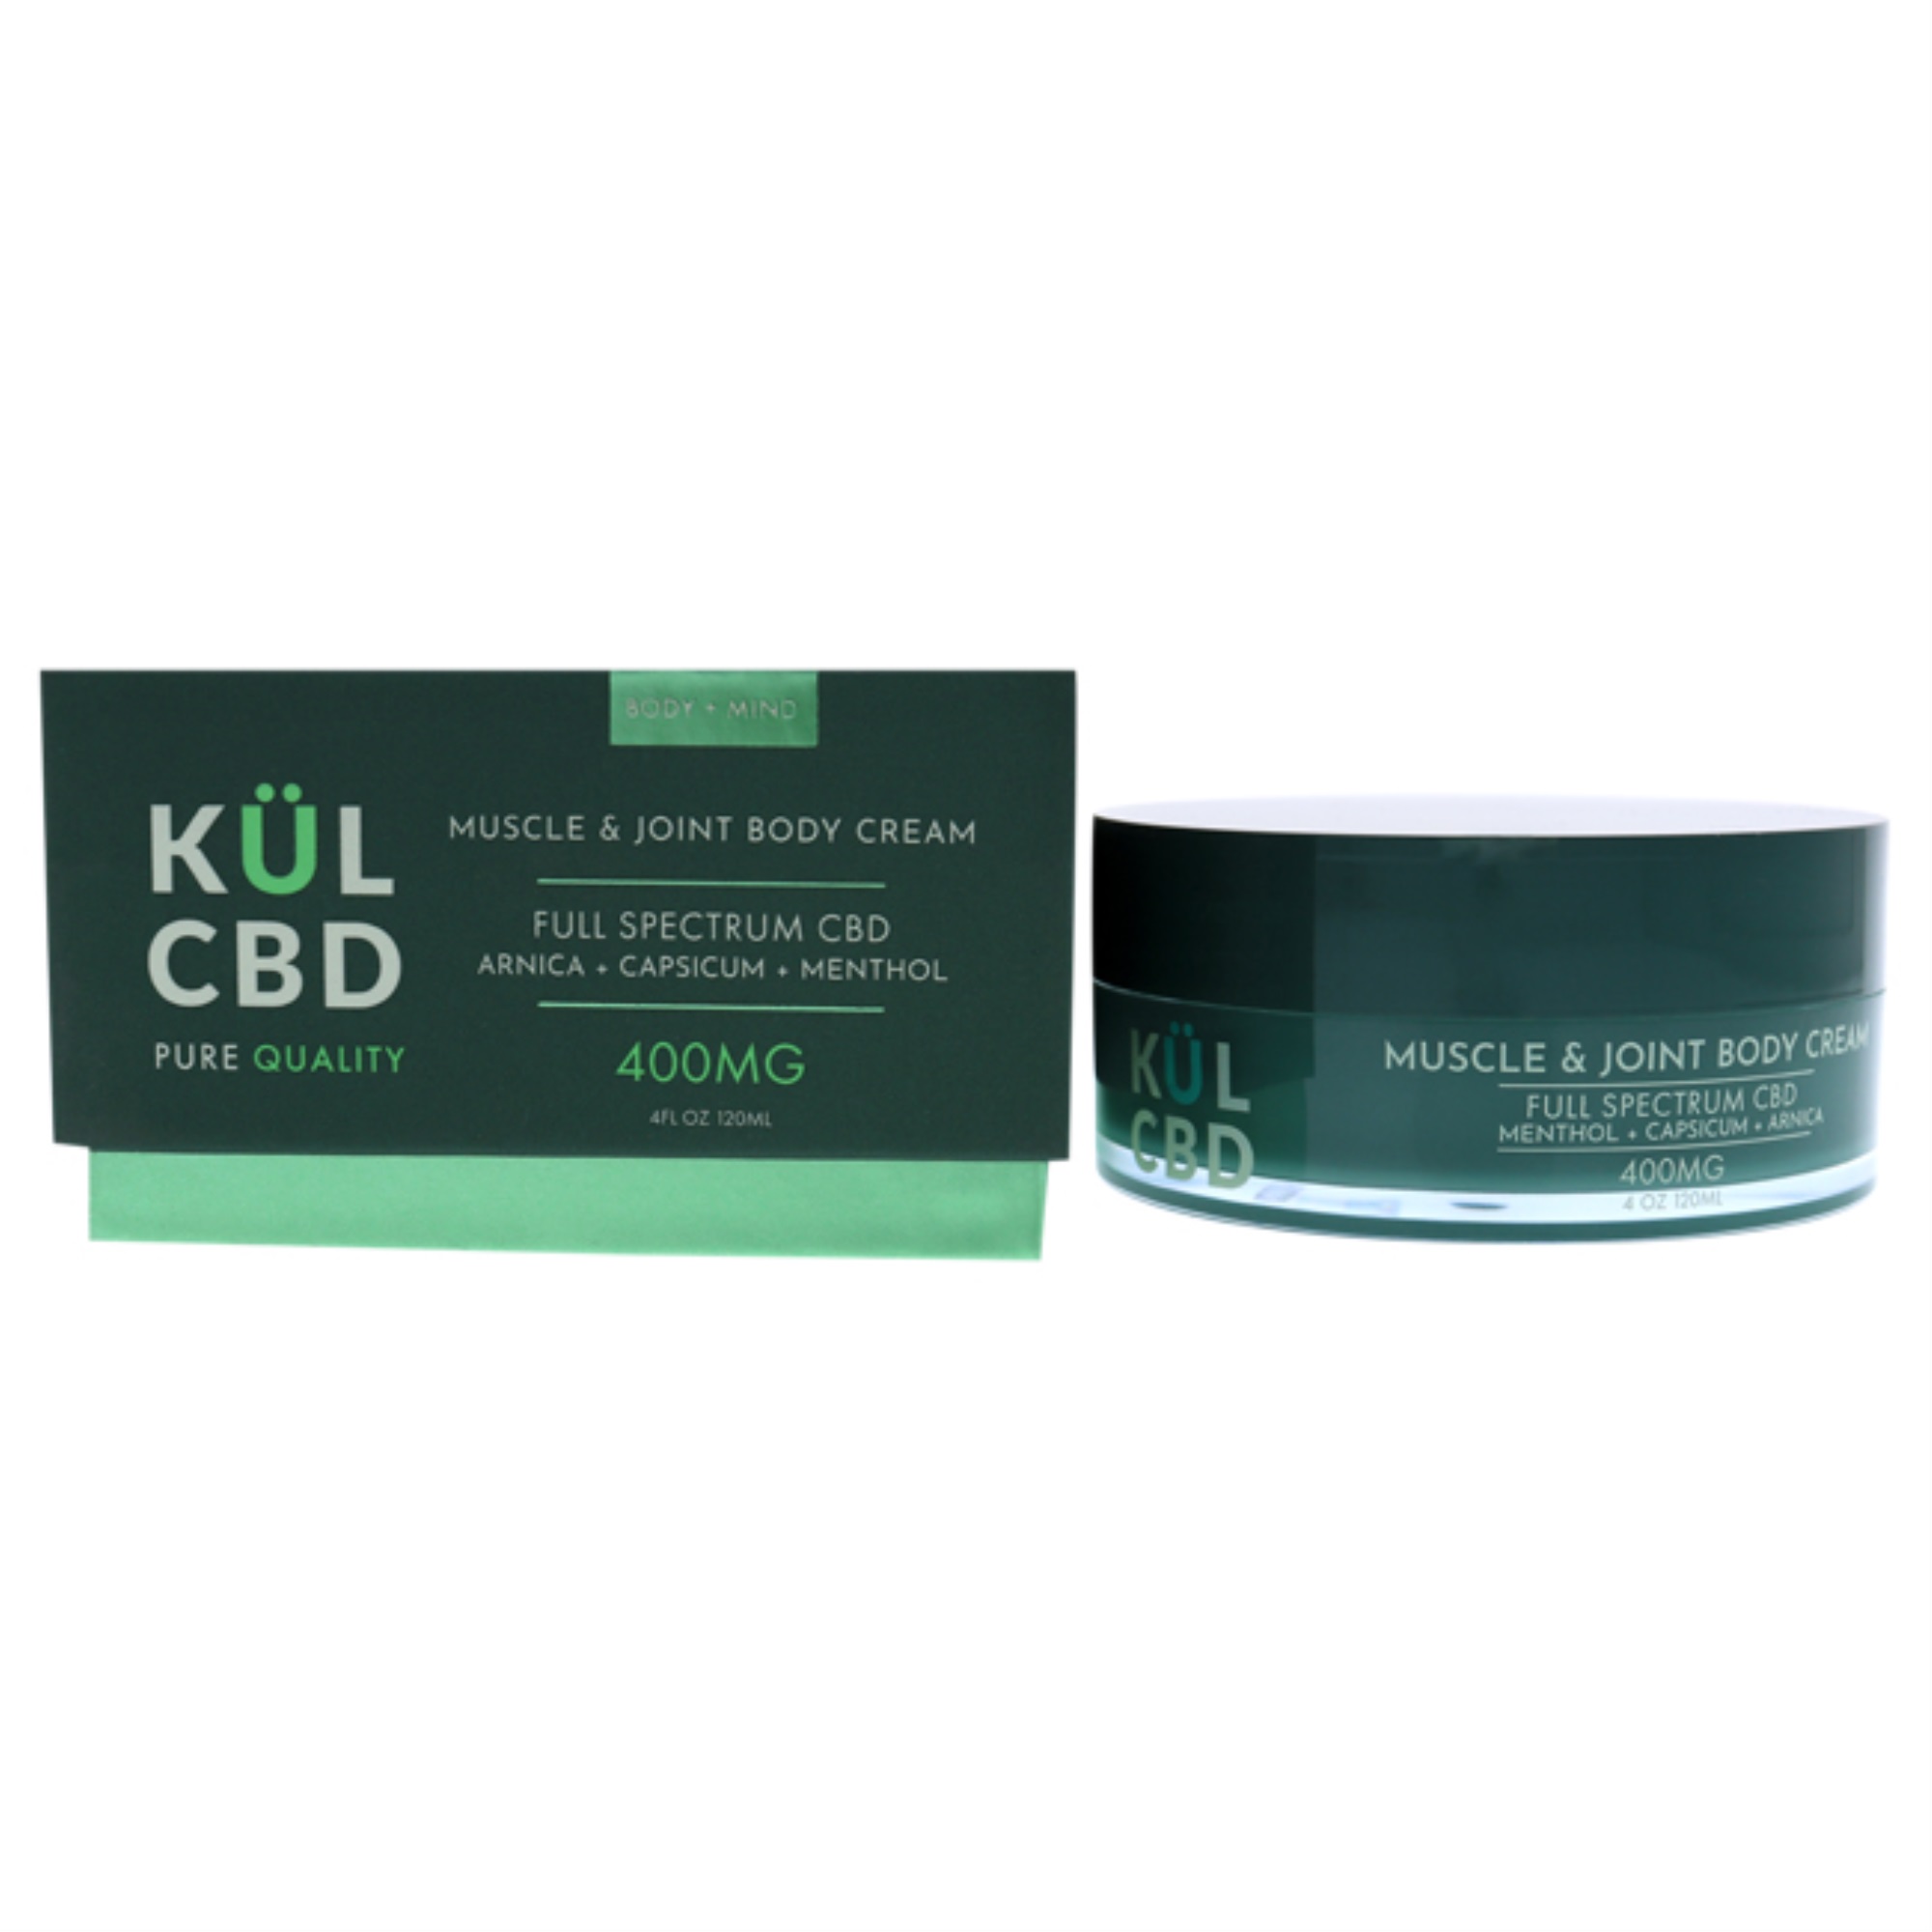 Kul CBD Muscle And Joint Body Cream Full Spectrum 400mg CBD by Kul CBD fir Unisex - 4 oz Body Cream